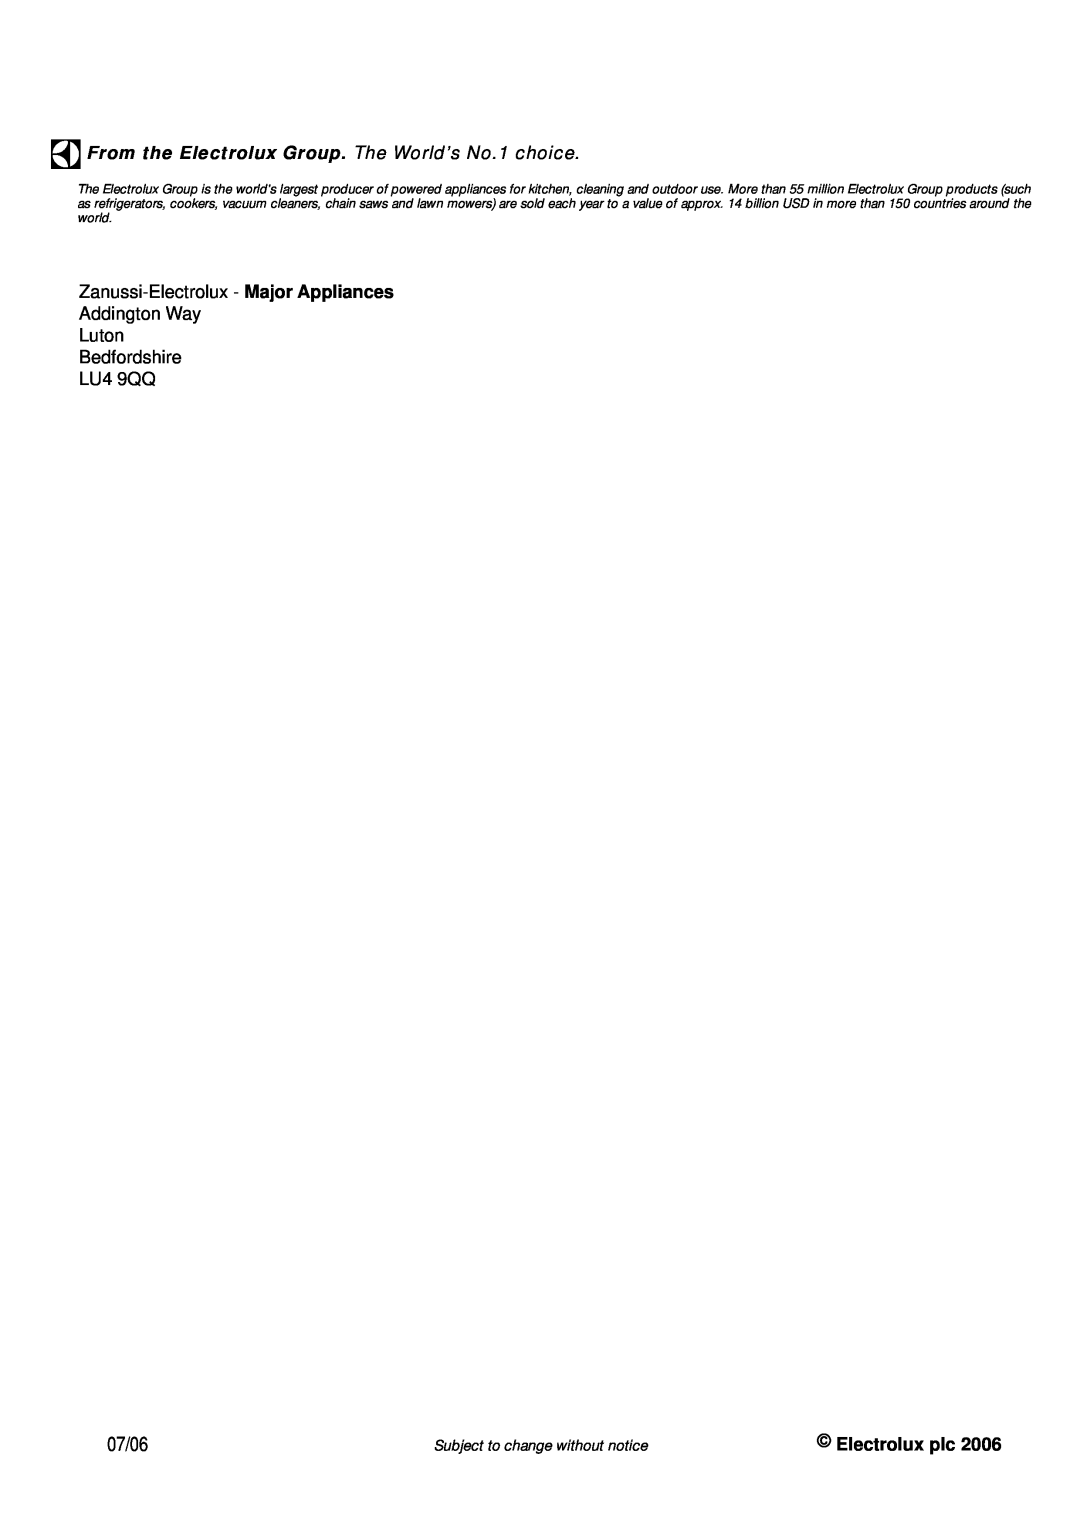 Zanussi ZDF301 manual Zanussi-Electrolux, Addington Way, Luton, Bedfordshire, LU4 9QQ, Electrolux plc, 07/06 